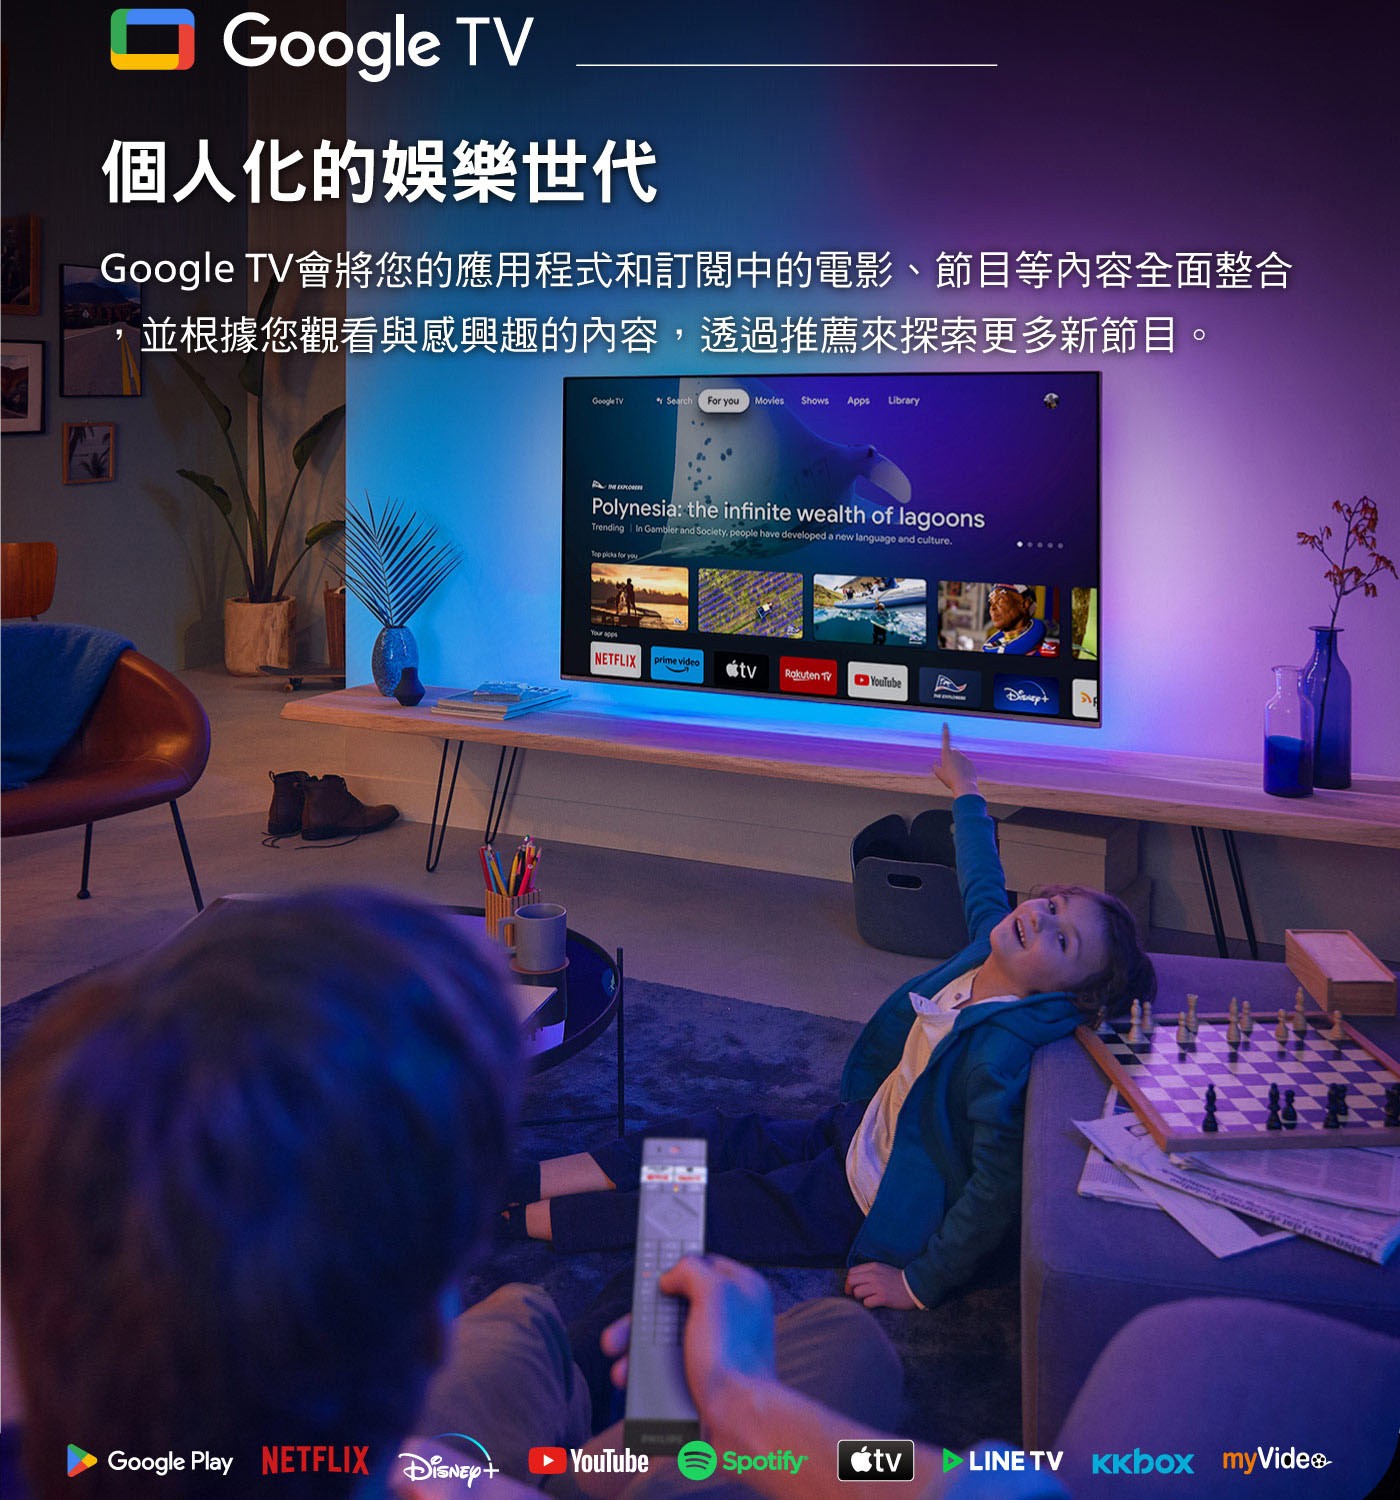 Philips MiniLED Google TV 顯示器，MINI LED +Quantum Dot 色彩技術 ，廣色域 98% DCI 120Hz面板，Google TV 個人化的連網娛樂系統+聲控語音，三邊流光溢彩身臨其境娛樂。